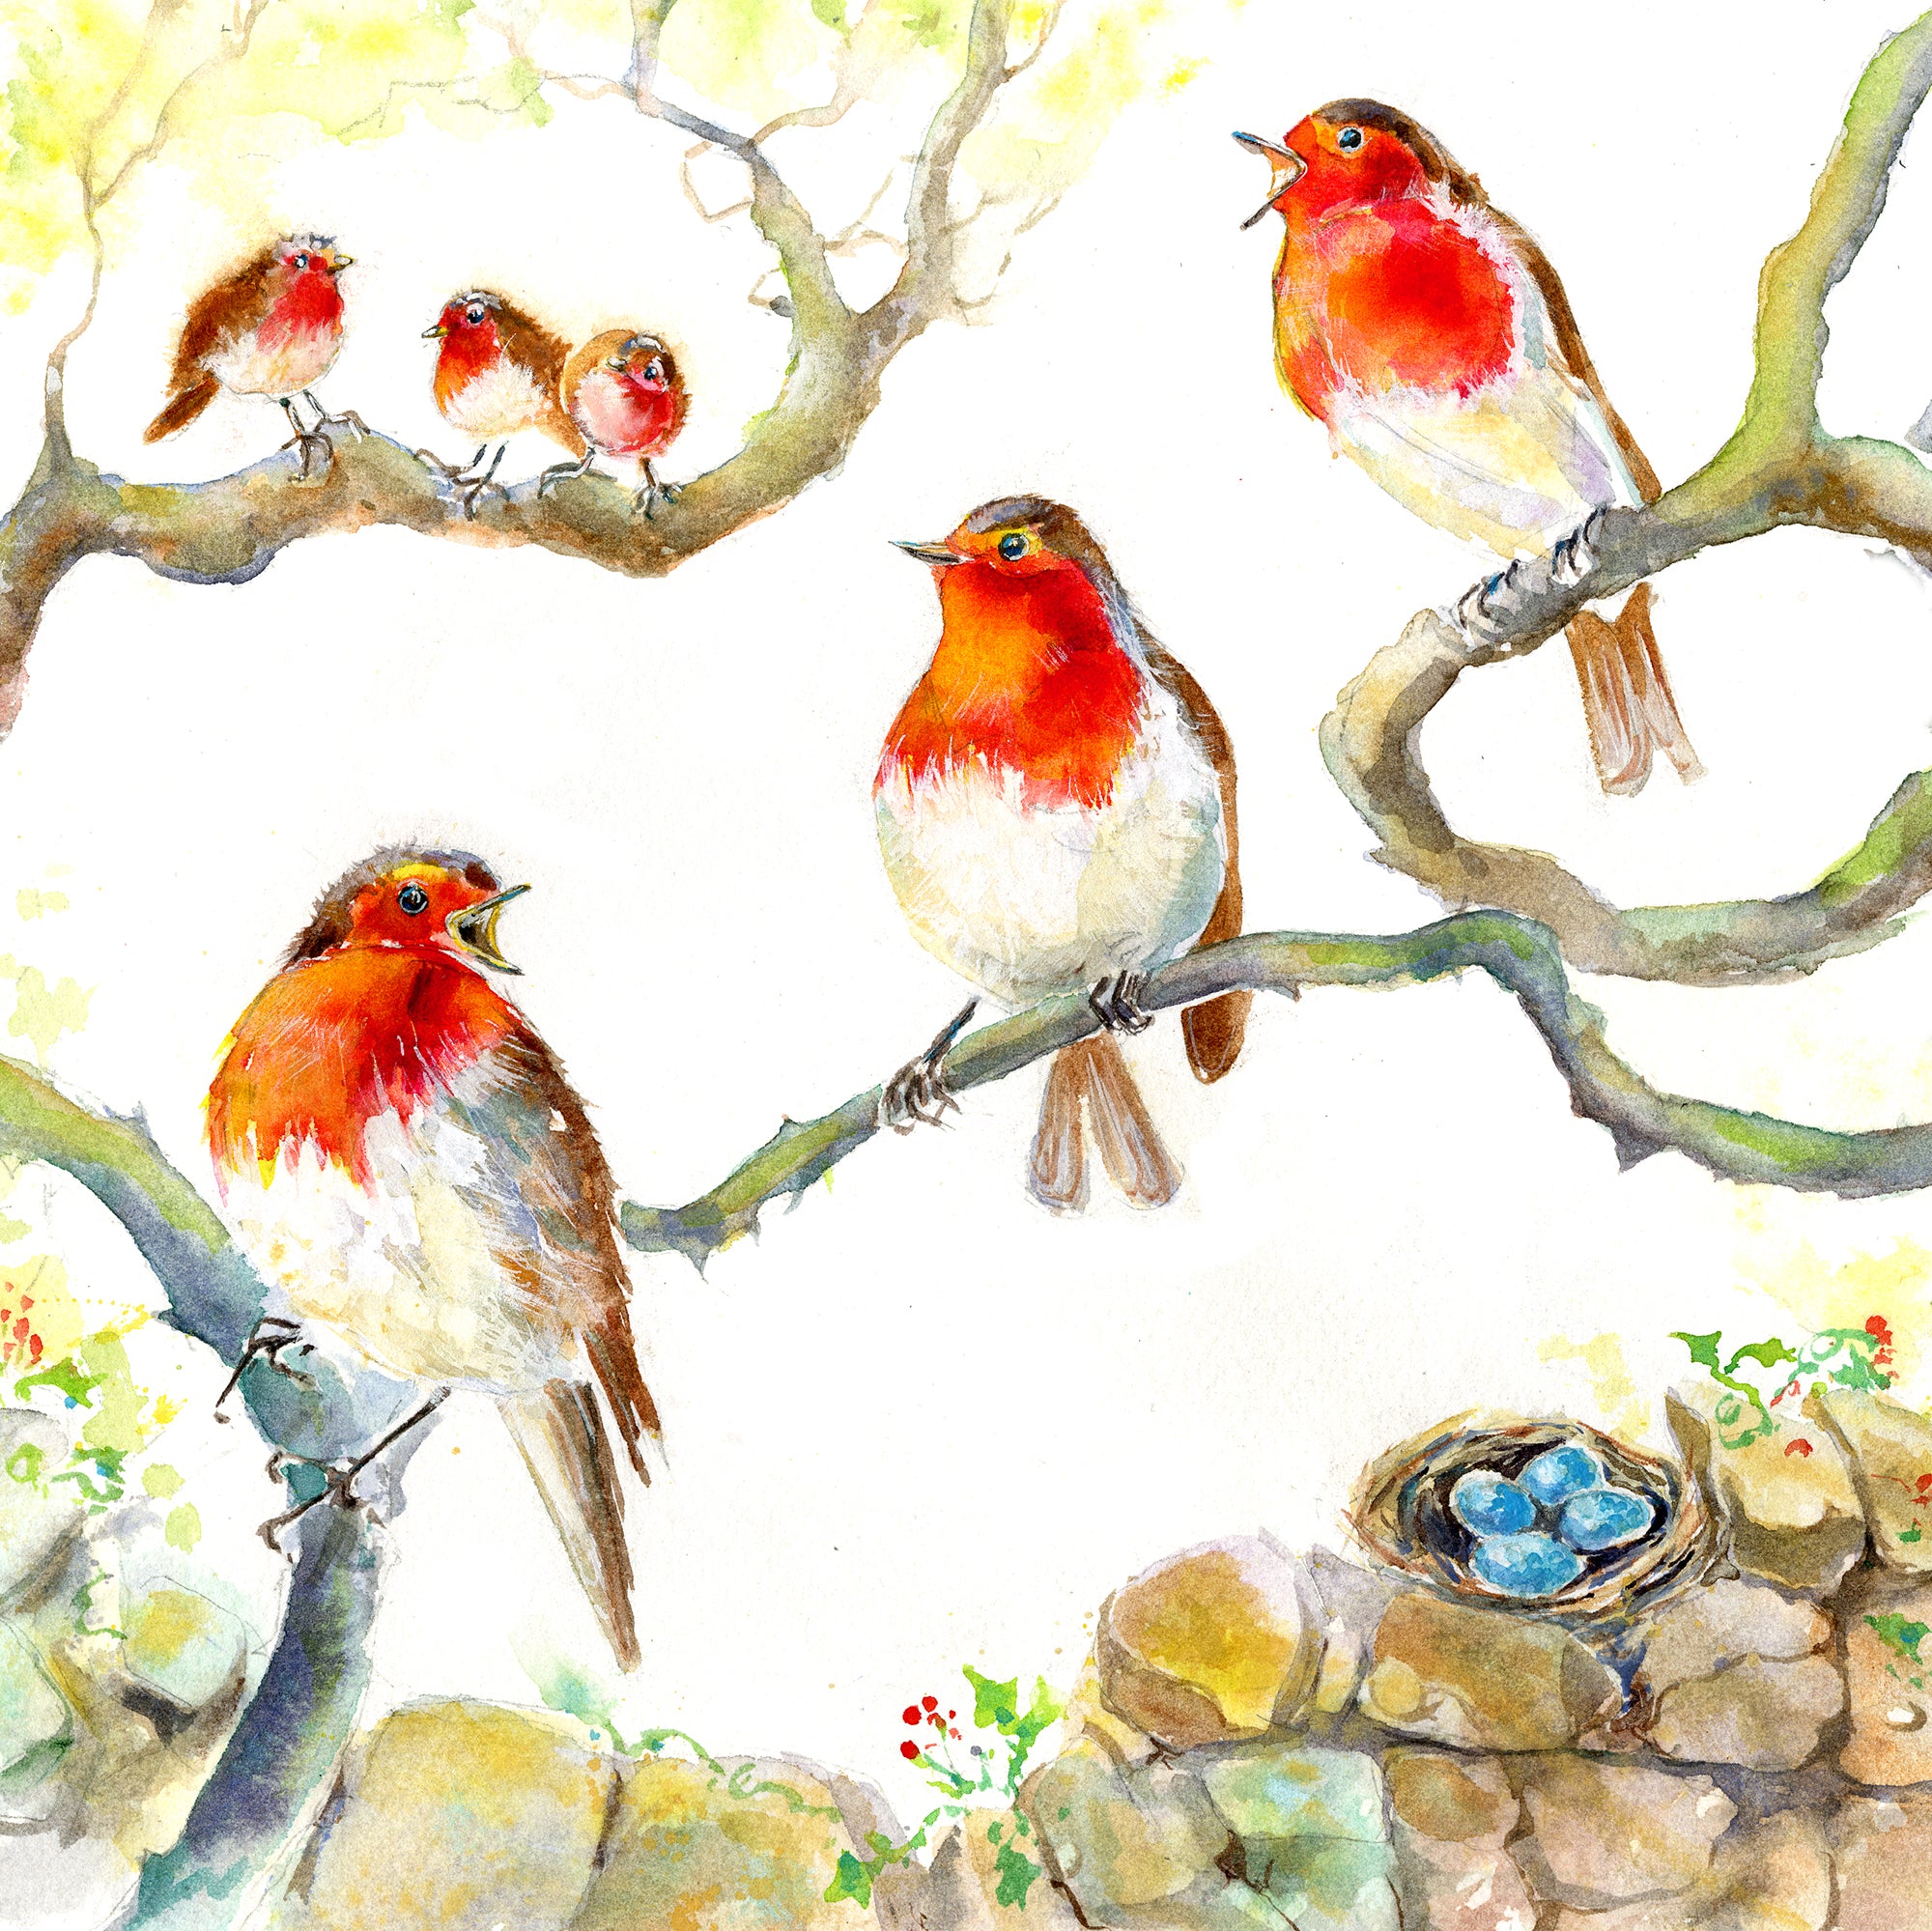 Robin Garden song Bird Greeting Cards Artist Watercolour painted design by sheila gill